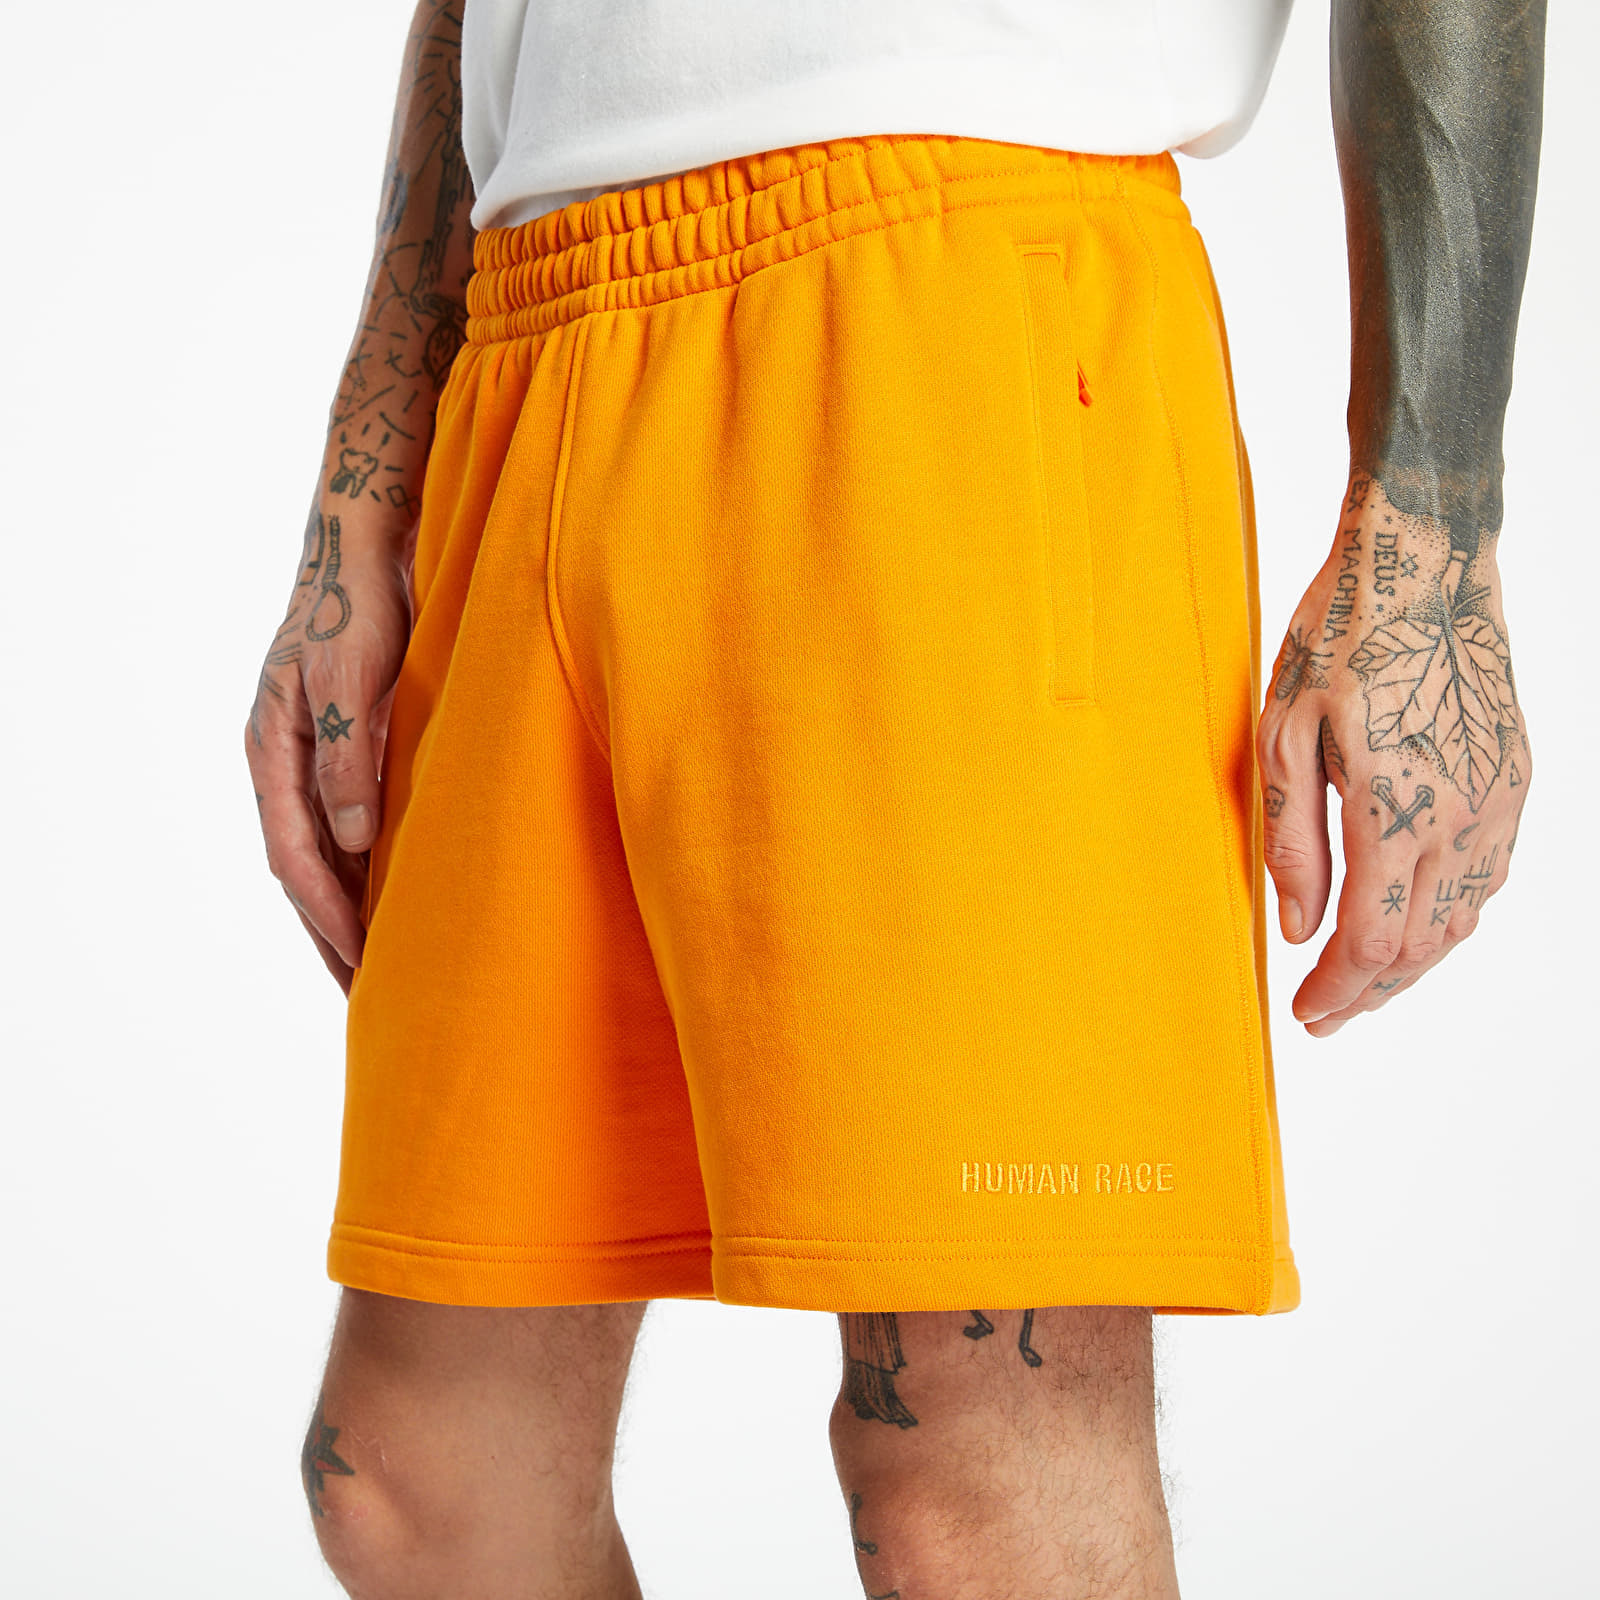 Kurzhosen adidas x Pharrell Williams Basics Shorts Orange